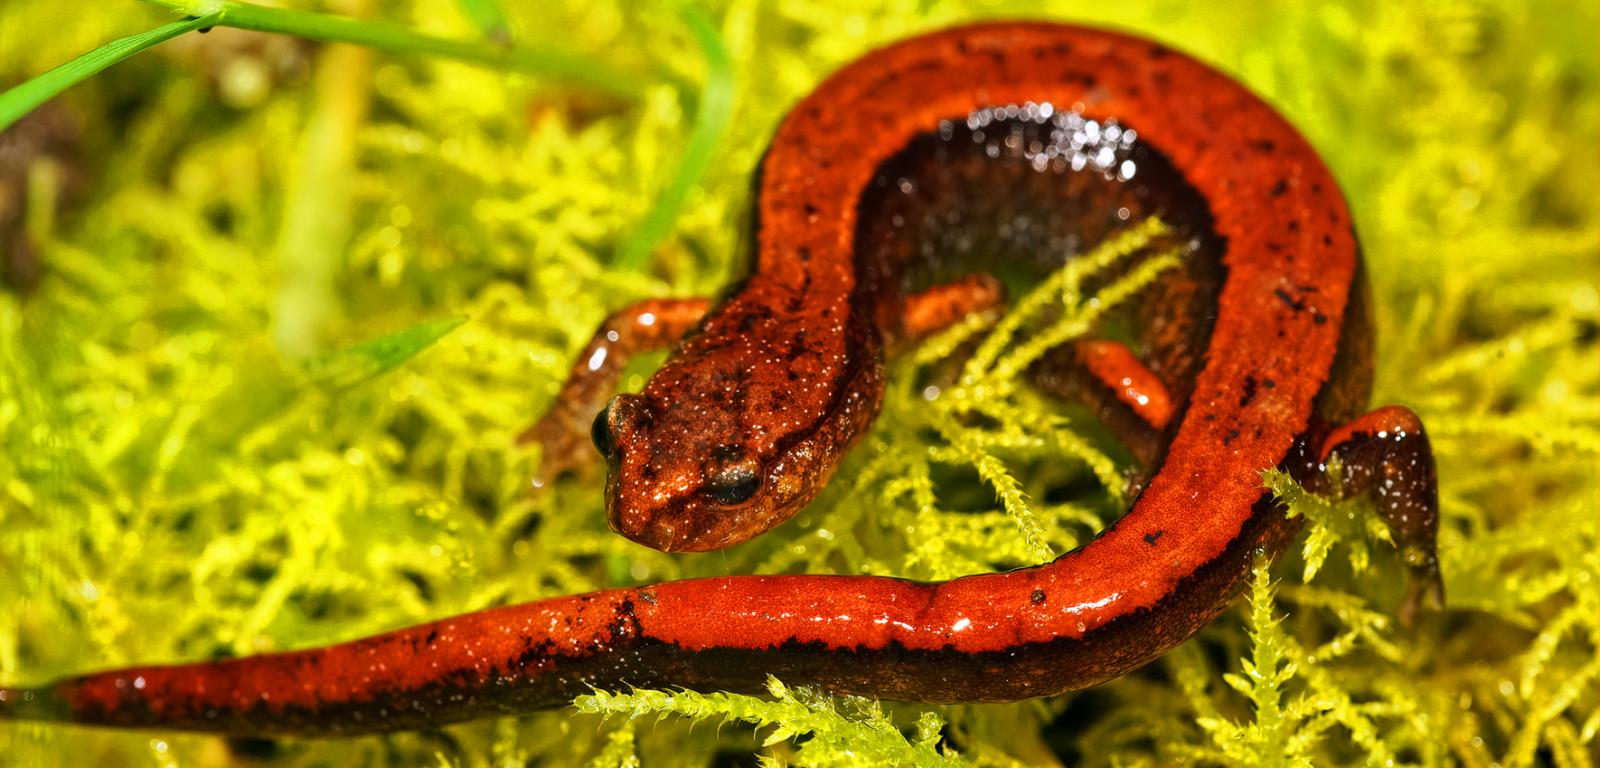 Salamandra czerwonogrzbieta (Plethodon vehiculum).